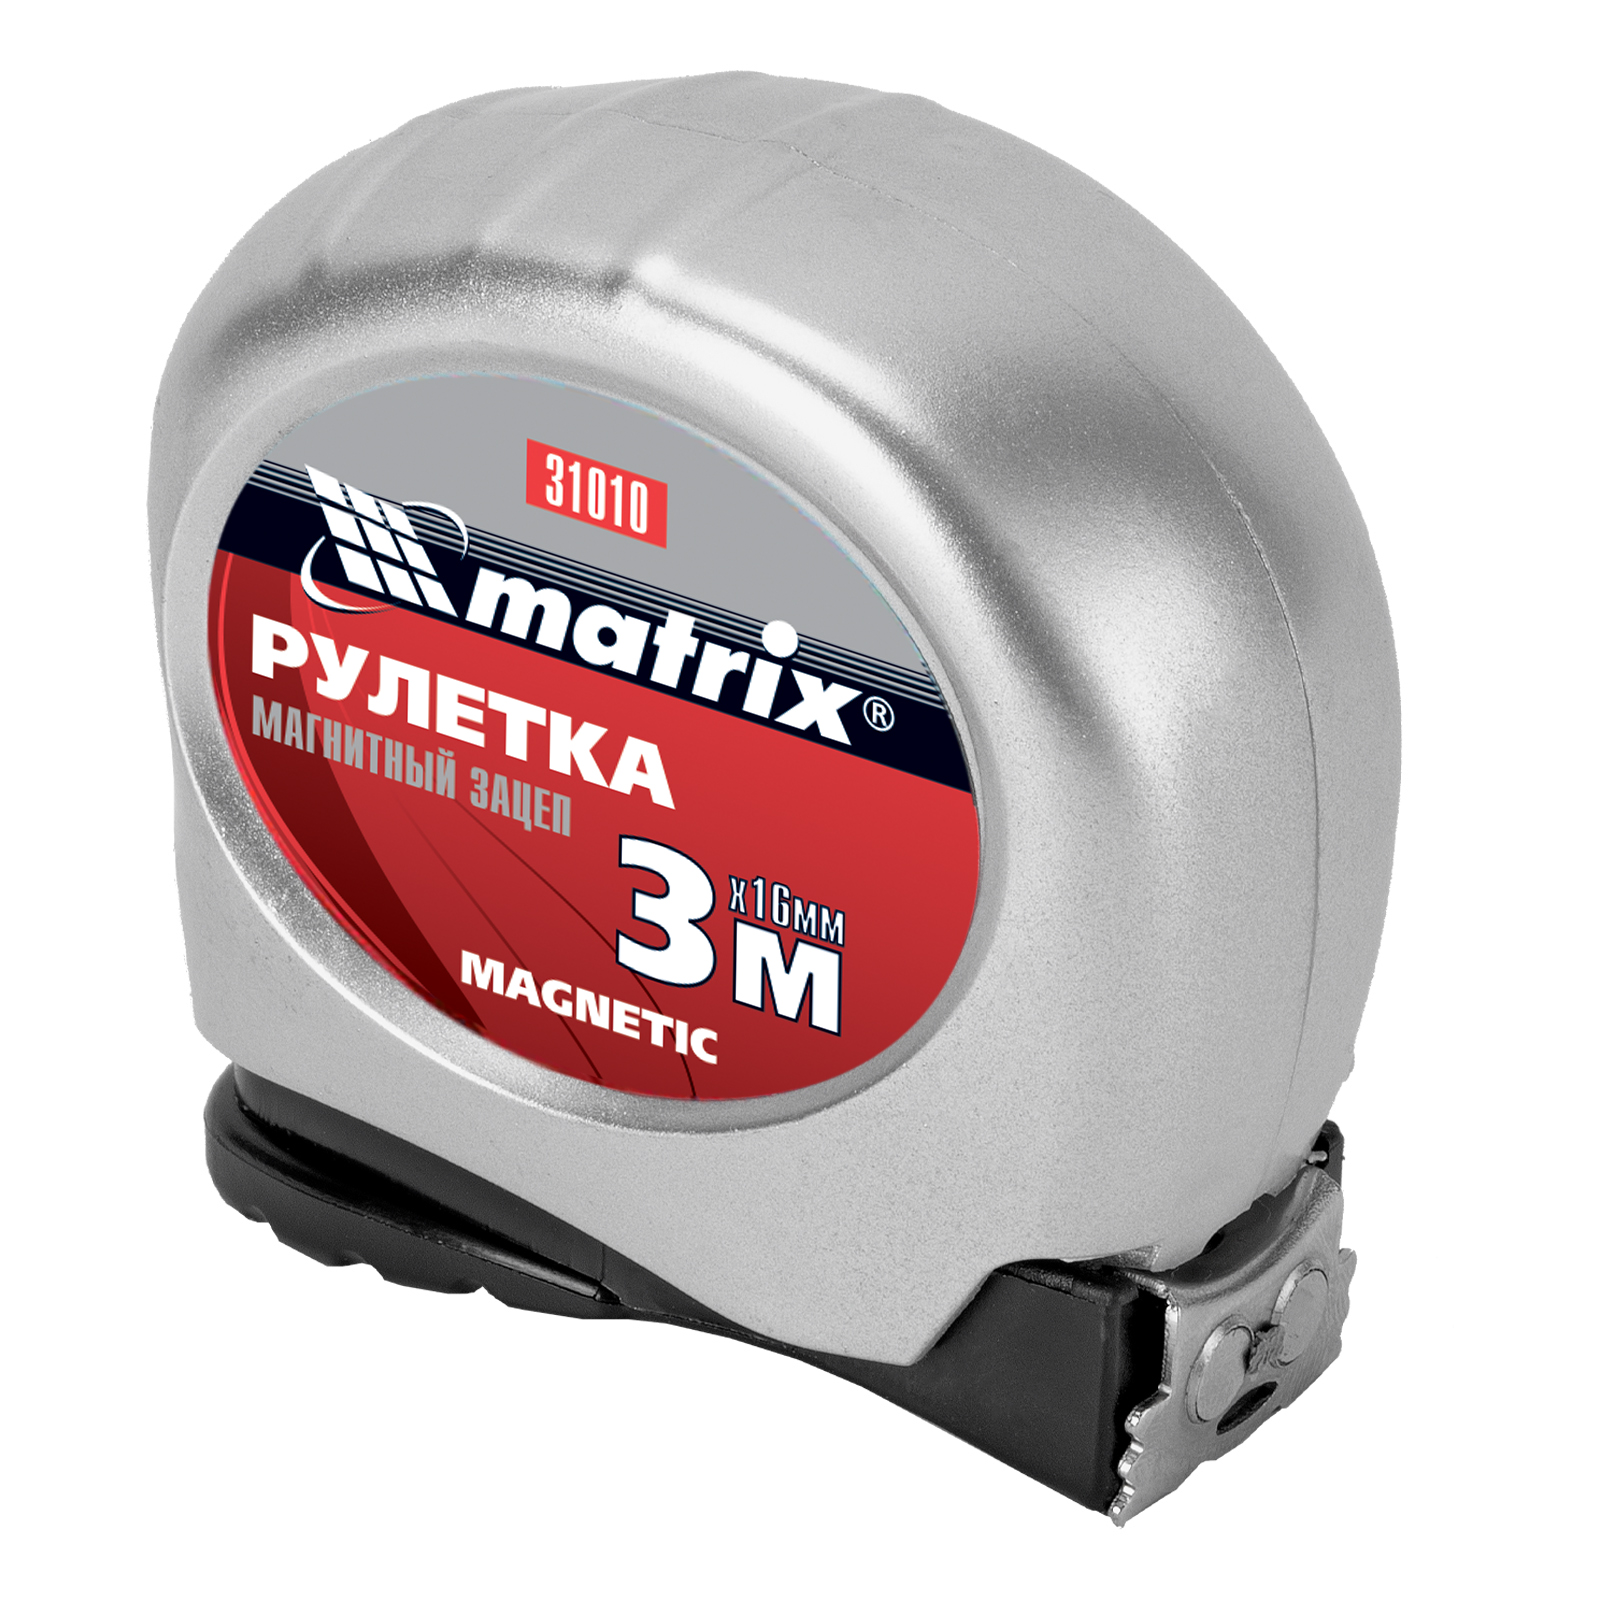 рулетка matrix magnetic 5мх19мм 31011 Рулетка MATRIX Magnetic 3мх16мм 31010